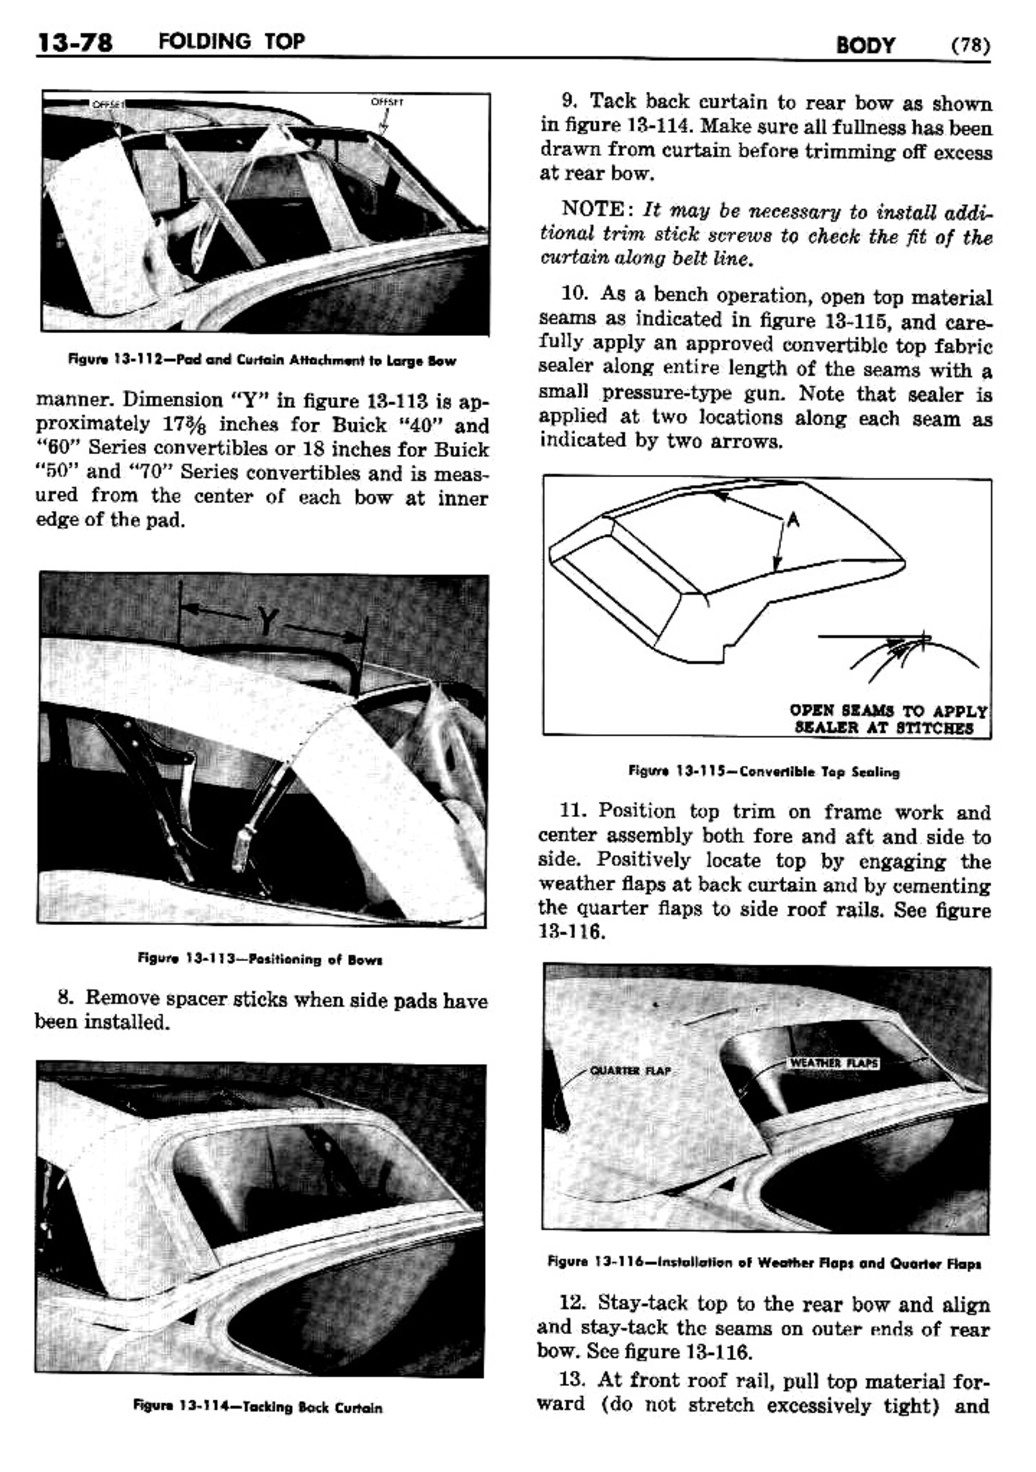 n_1957 Buick Body Service Manual-080-080.jpg